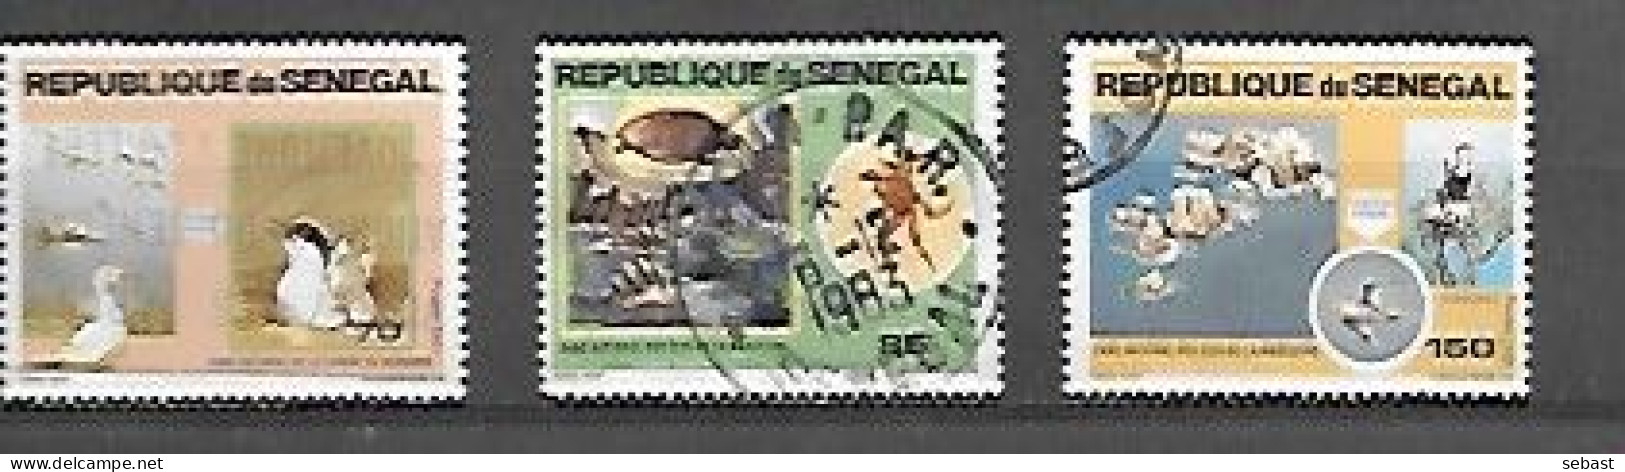 TIMBRE OBLITERE DU SENEGAL DE 1981 N° MICHEL 742/44 - Senegal (1960-...)